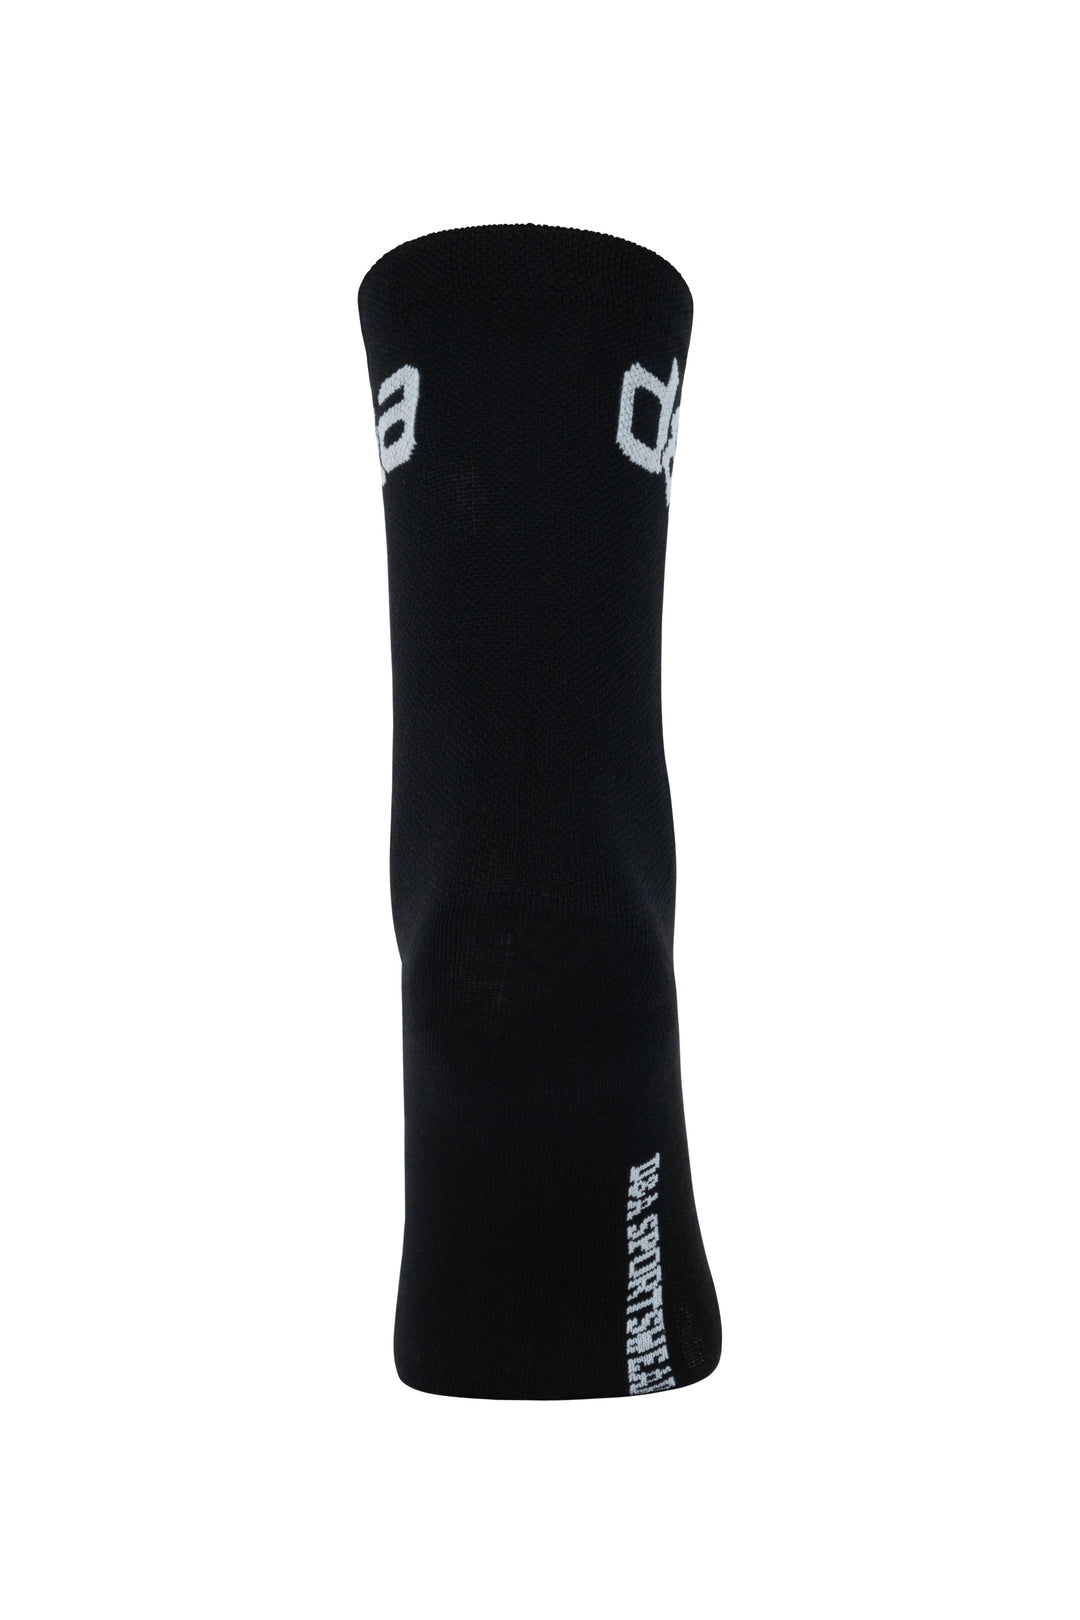 D&amp;A Cycling Socks - Black